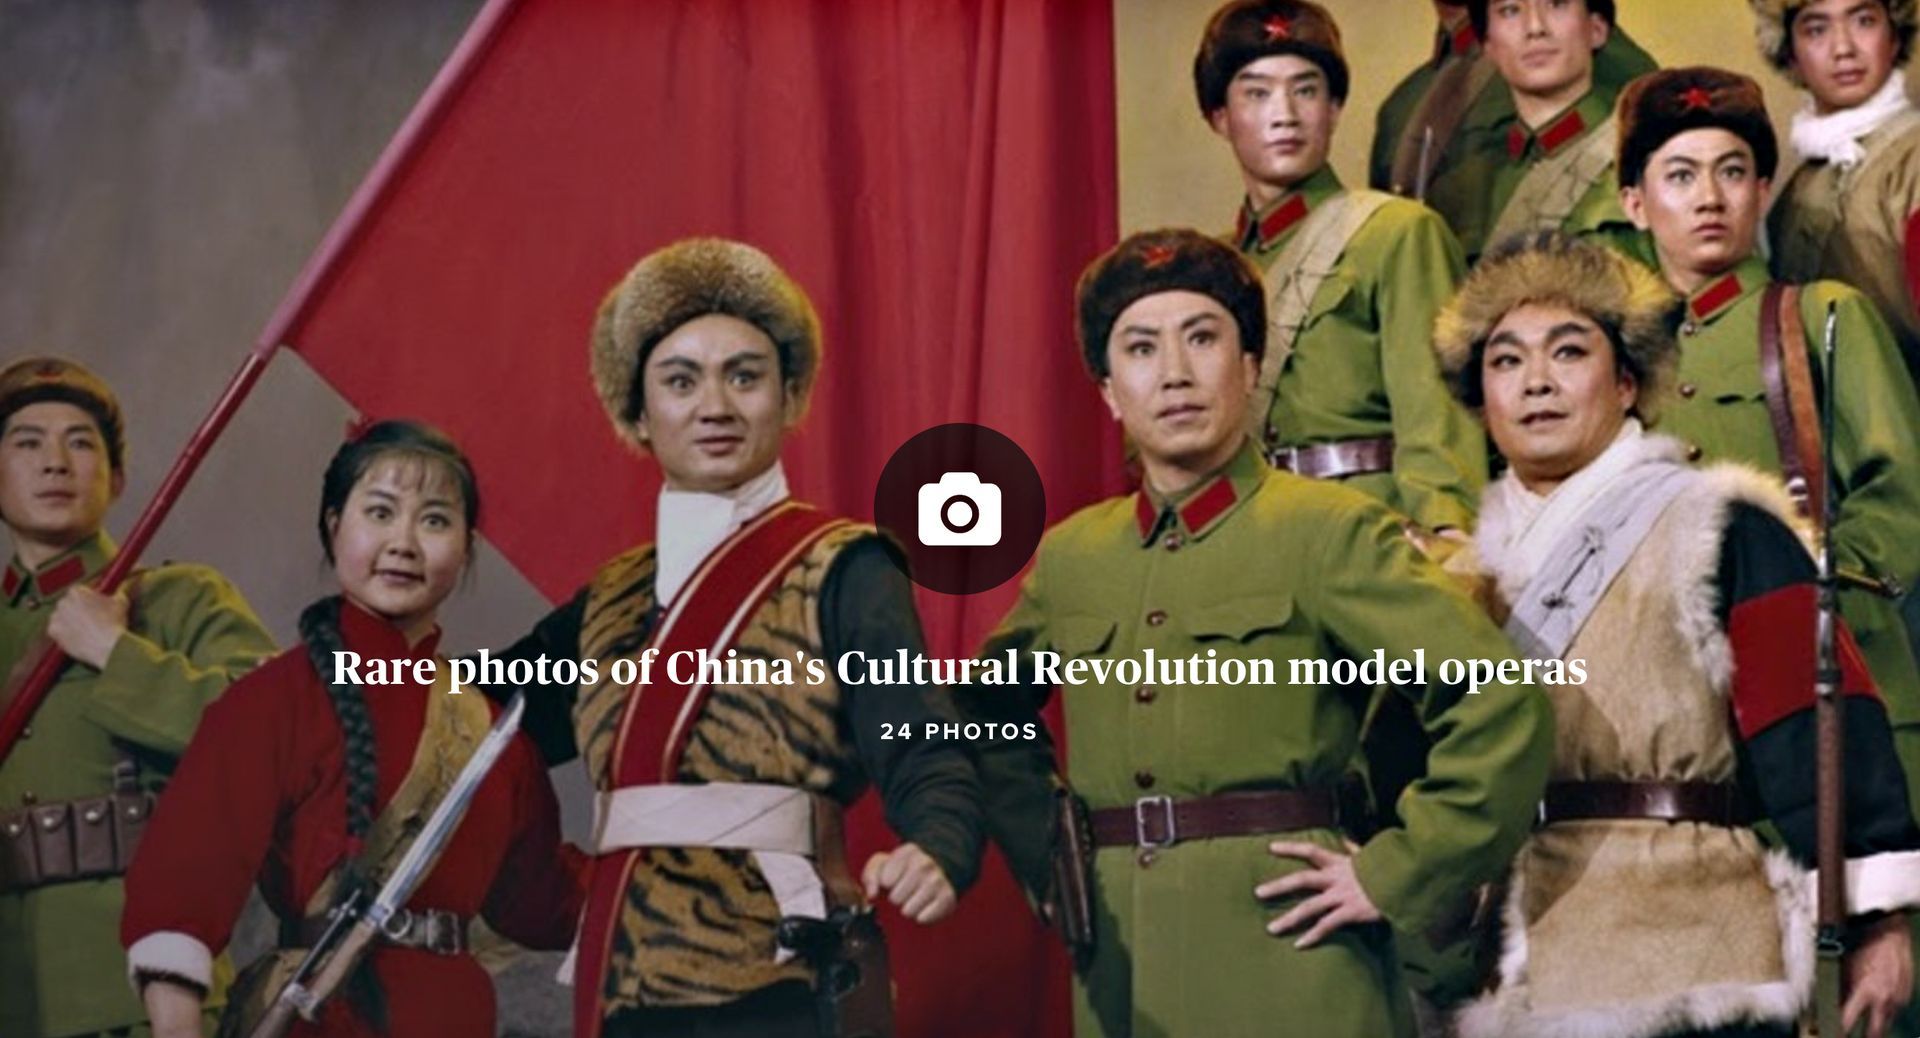 Photographer Zhang Yaxin and Madame Mao’s model operas
